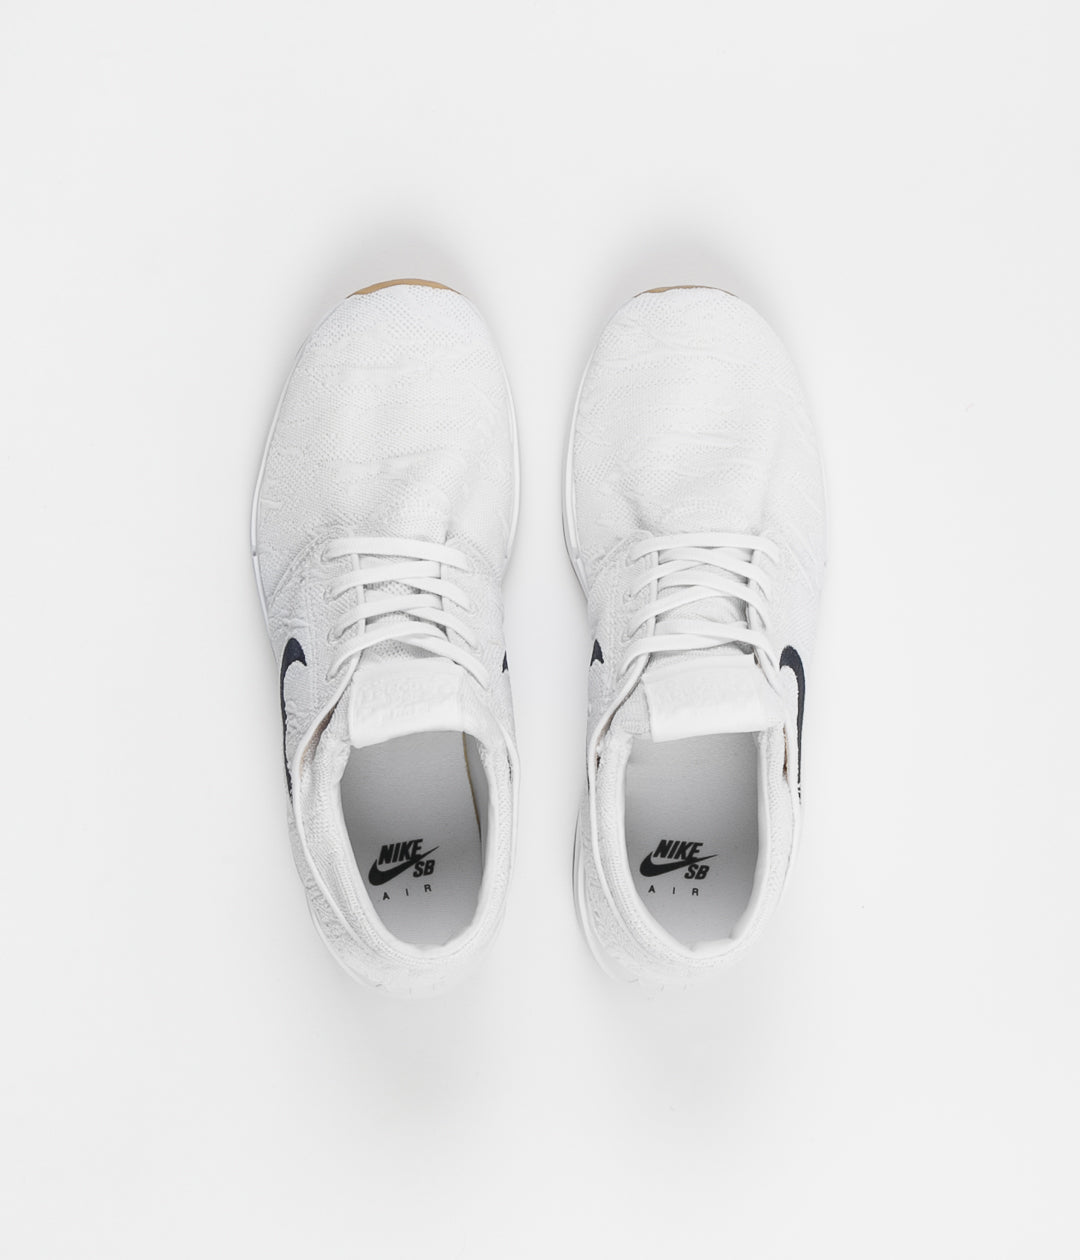 Nike SB Air Max Stefan Janoski 2 Shoes - White / - Celestial | Flatspot